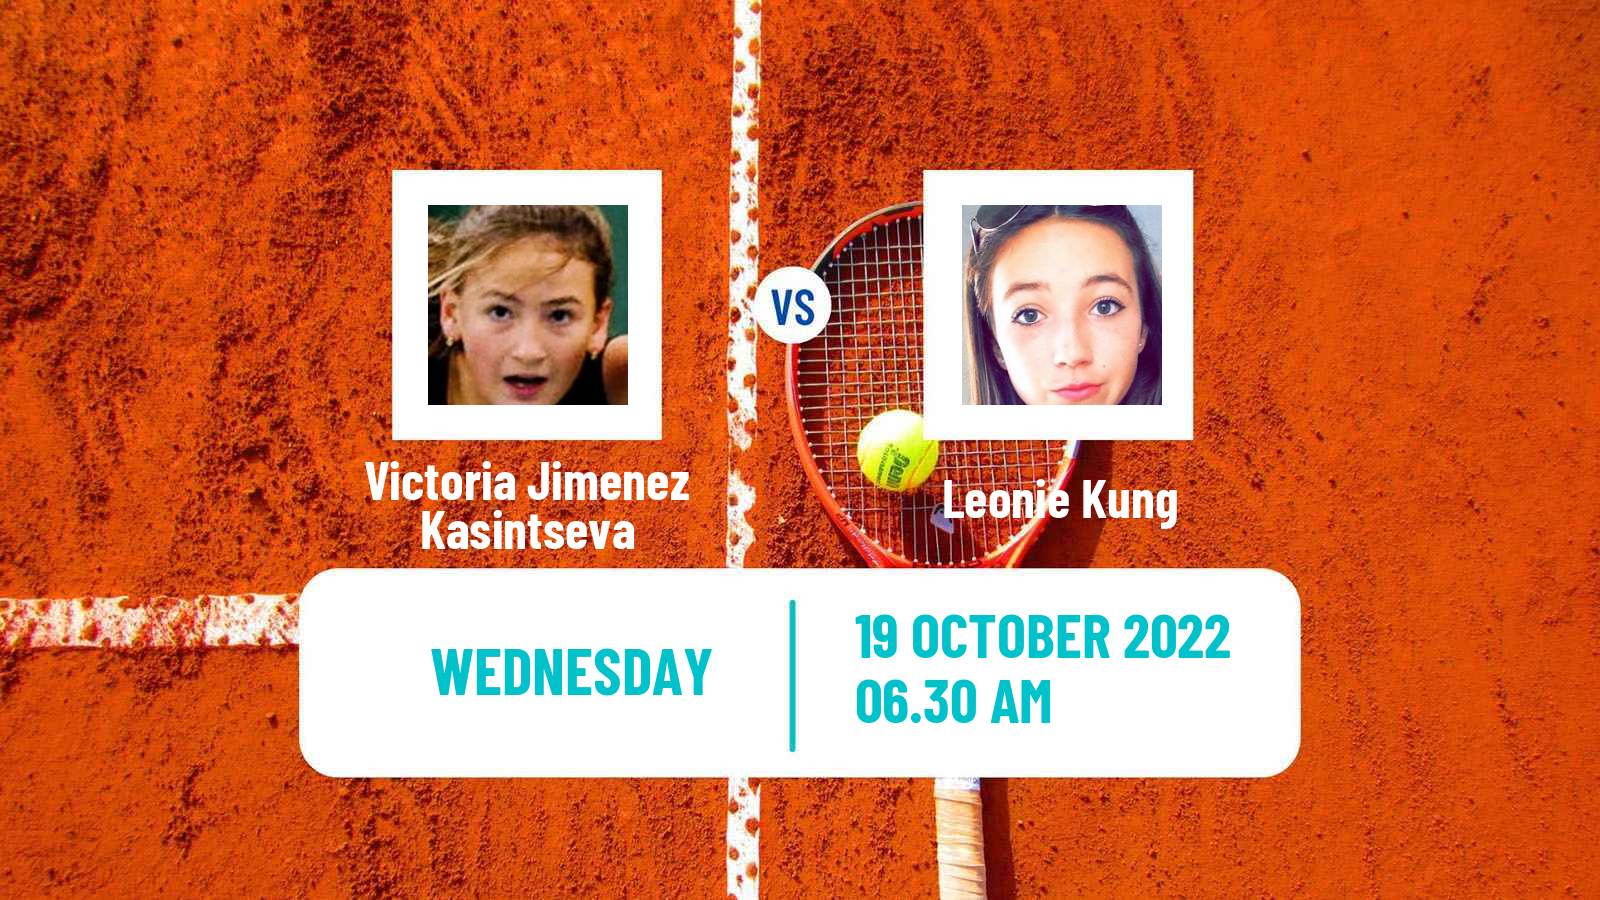 Tennis ITF Tournaments Victoria Jimenez Kasintseva - Leonie Kung